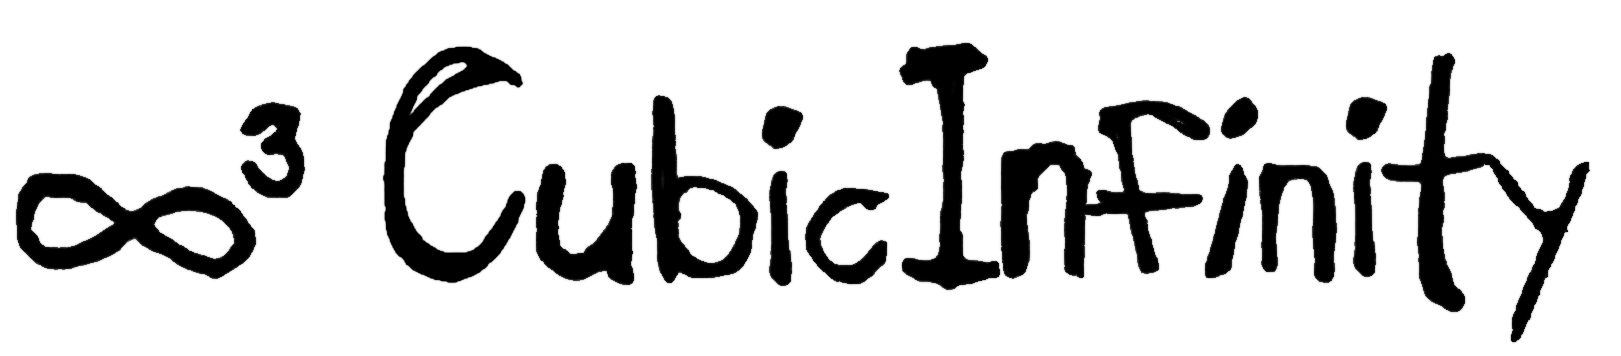 "∞³ CubicInfinity" logo